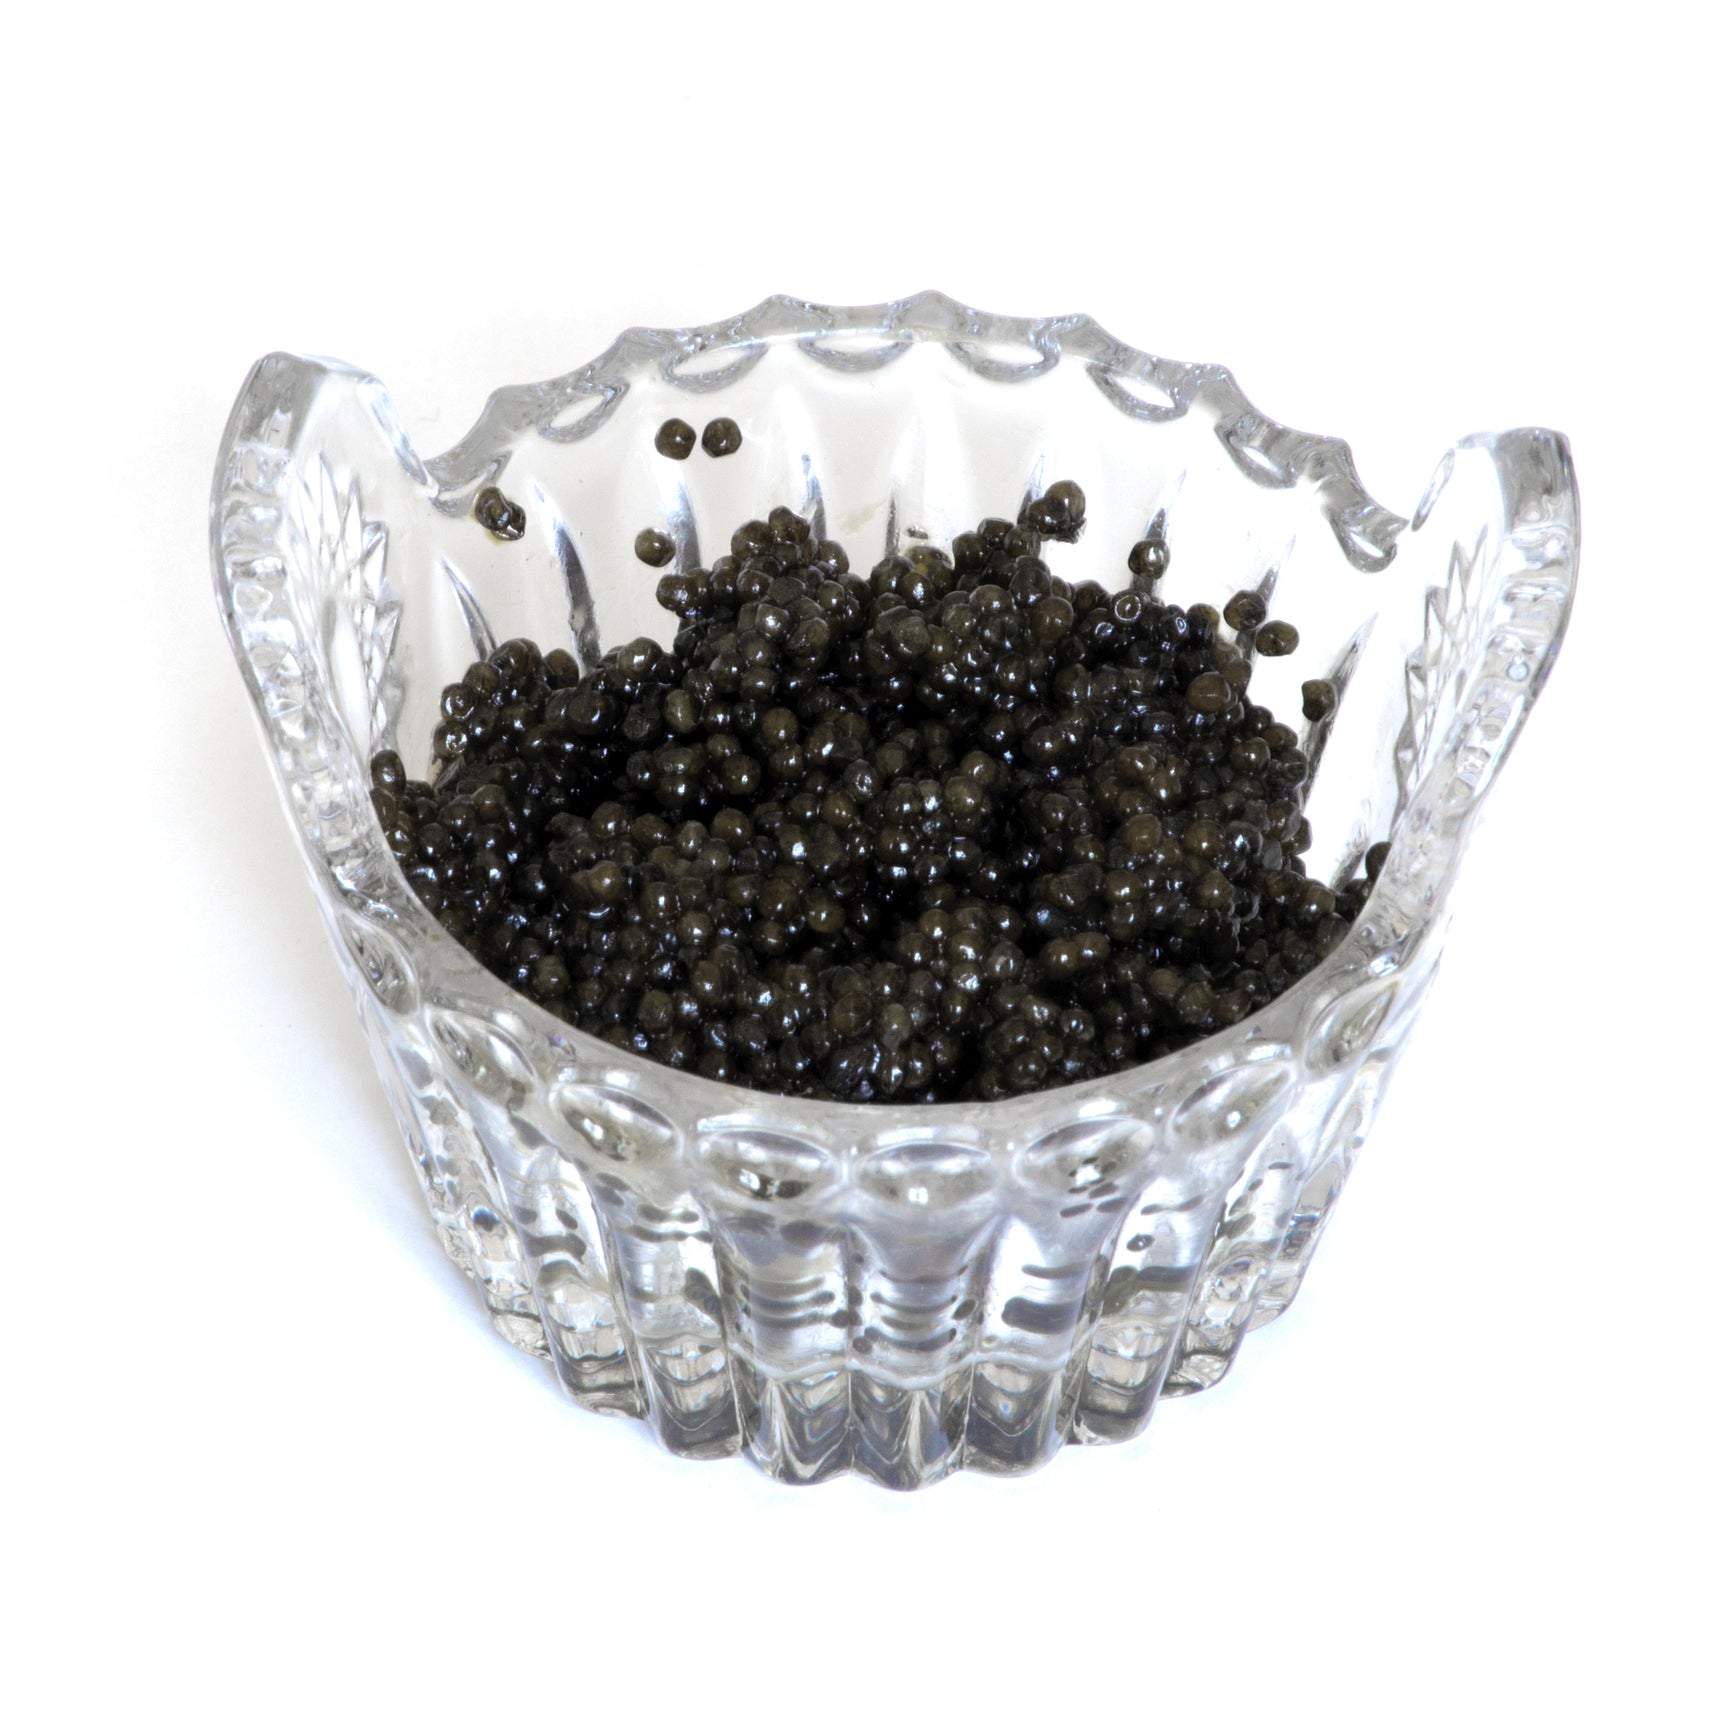  Story Behind Black Caviar